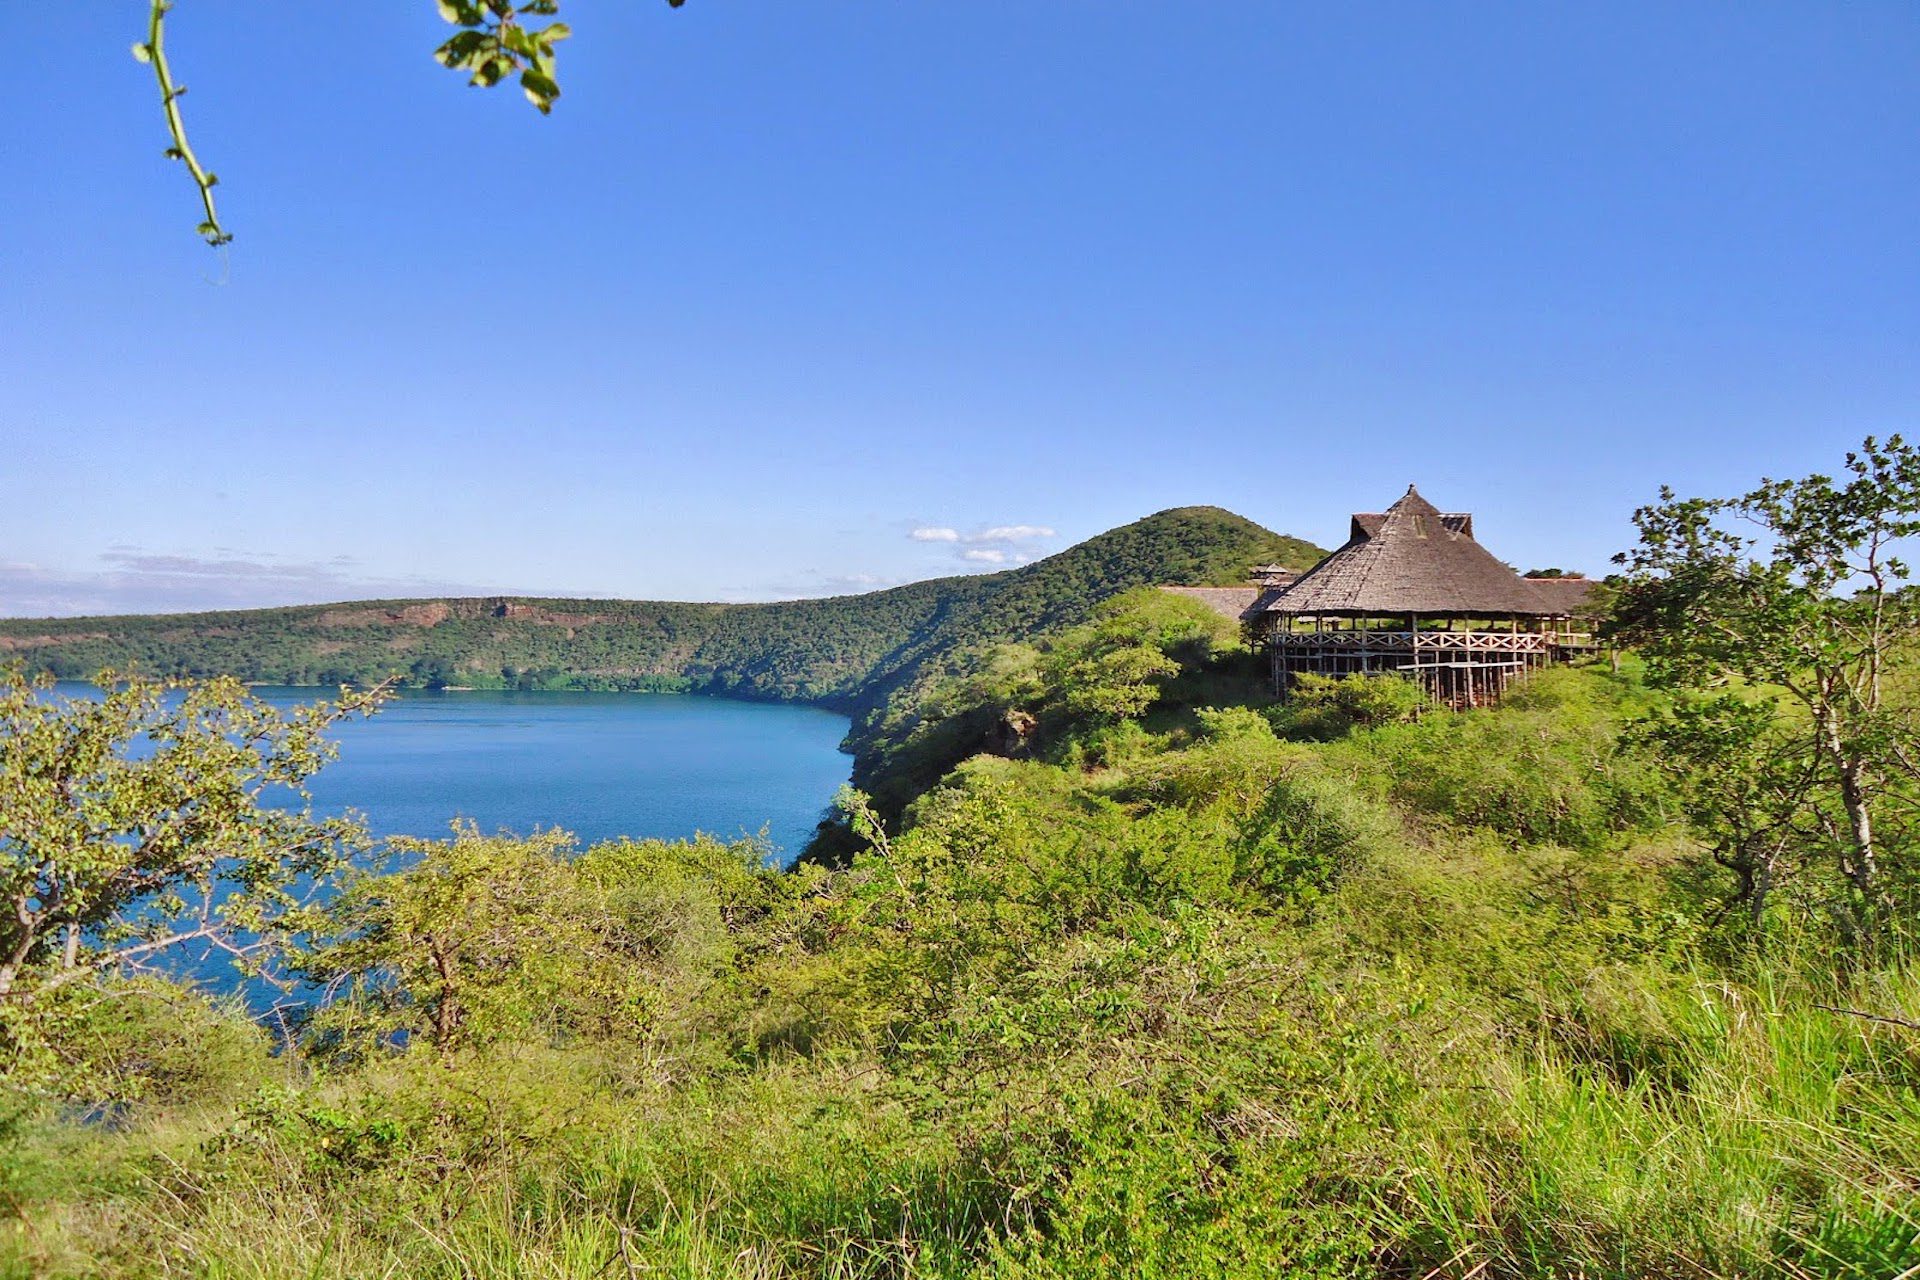 Lake Chala Safari Lodge - Restaurant with World Adventure Tours